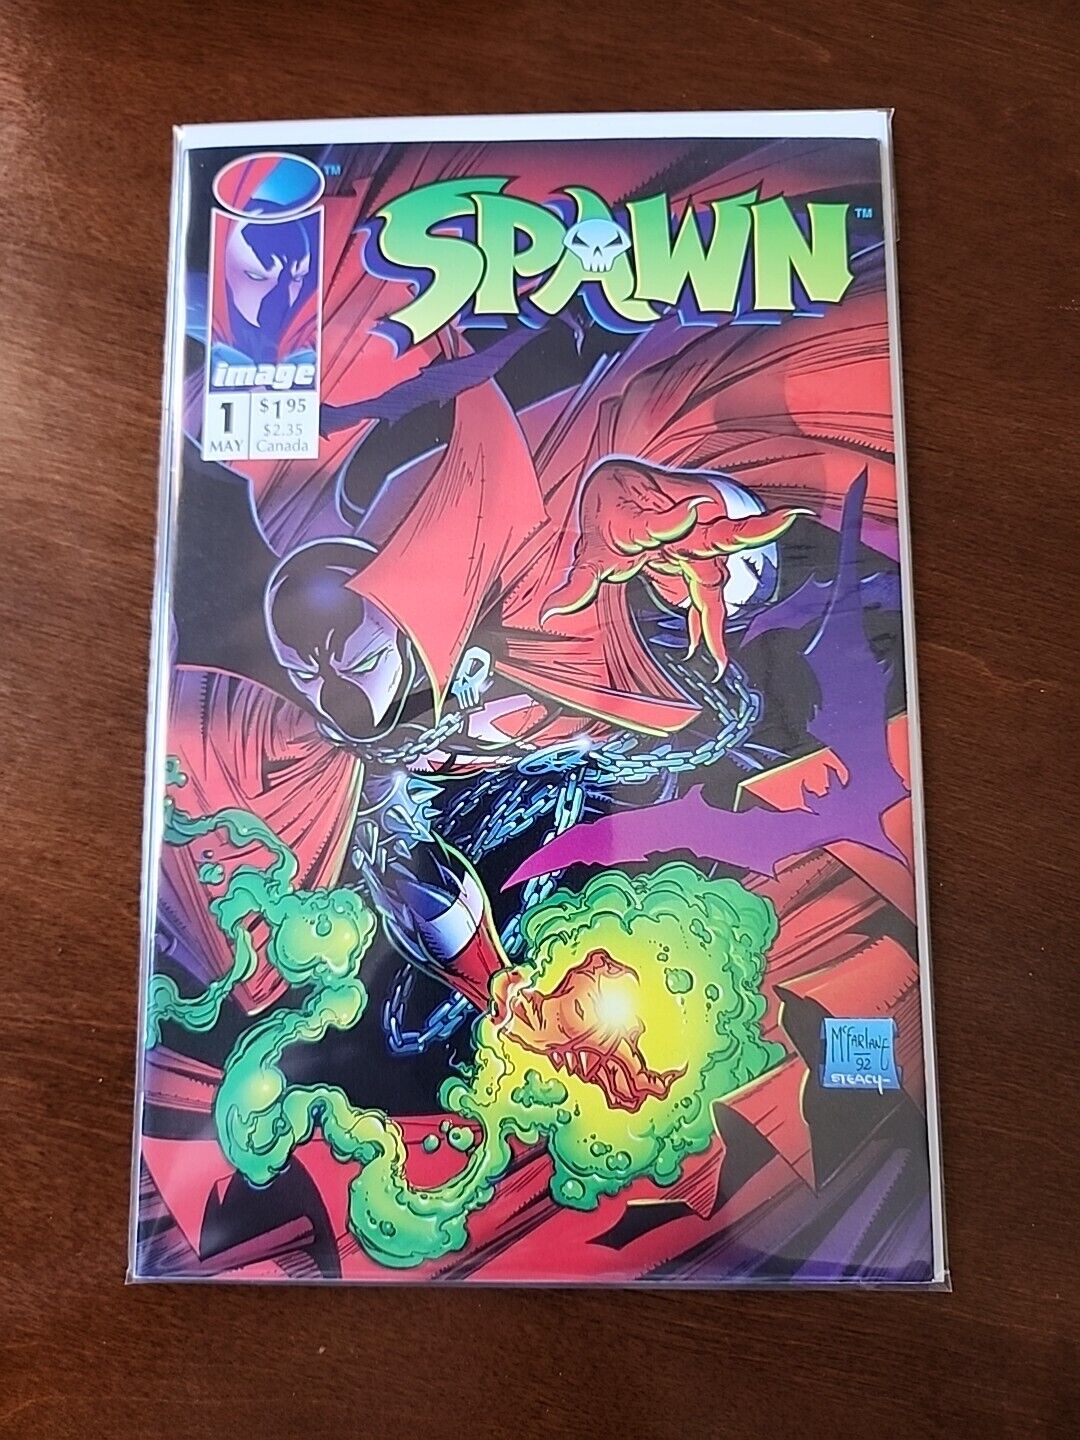 Spawn #1 (Image Comics Malibu Comics May 1992)